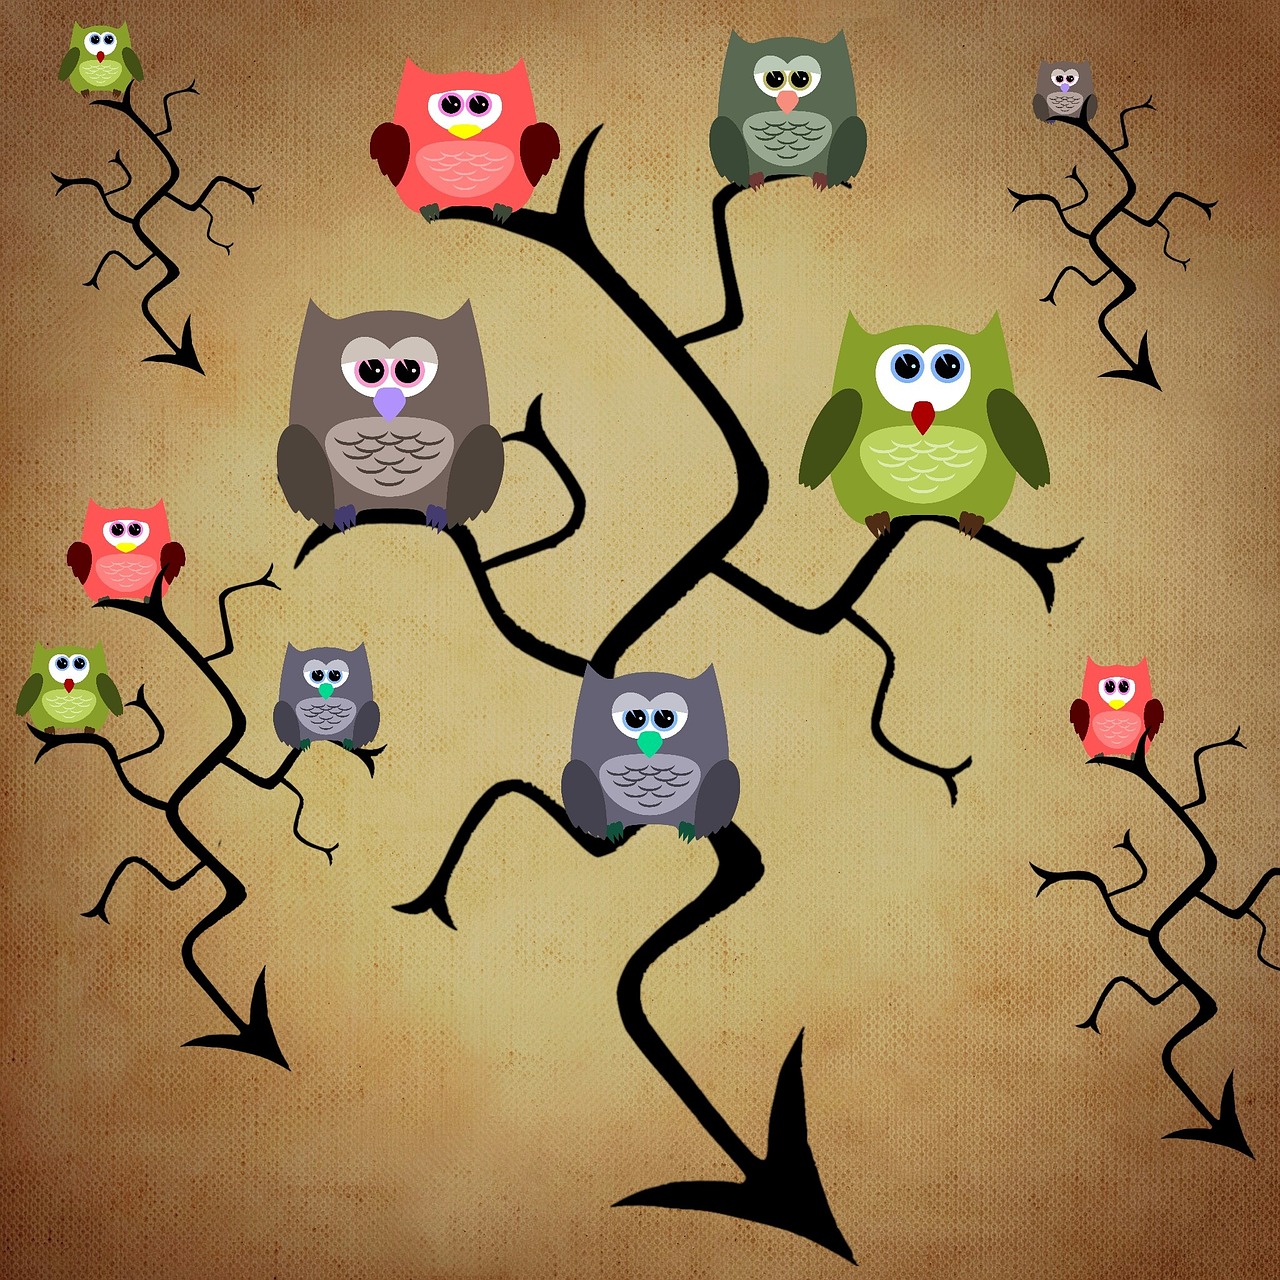 a group of owls sitting on top of a tree, by Viktor Oliva, trending on pixabay, dada, retro cartoon, neurons, ebay photo